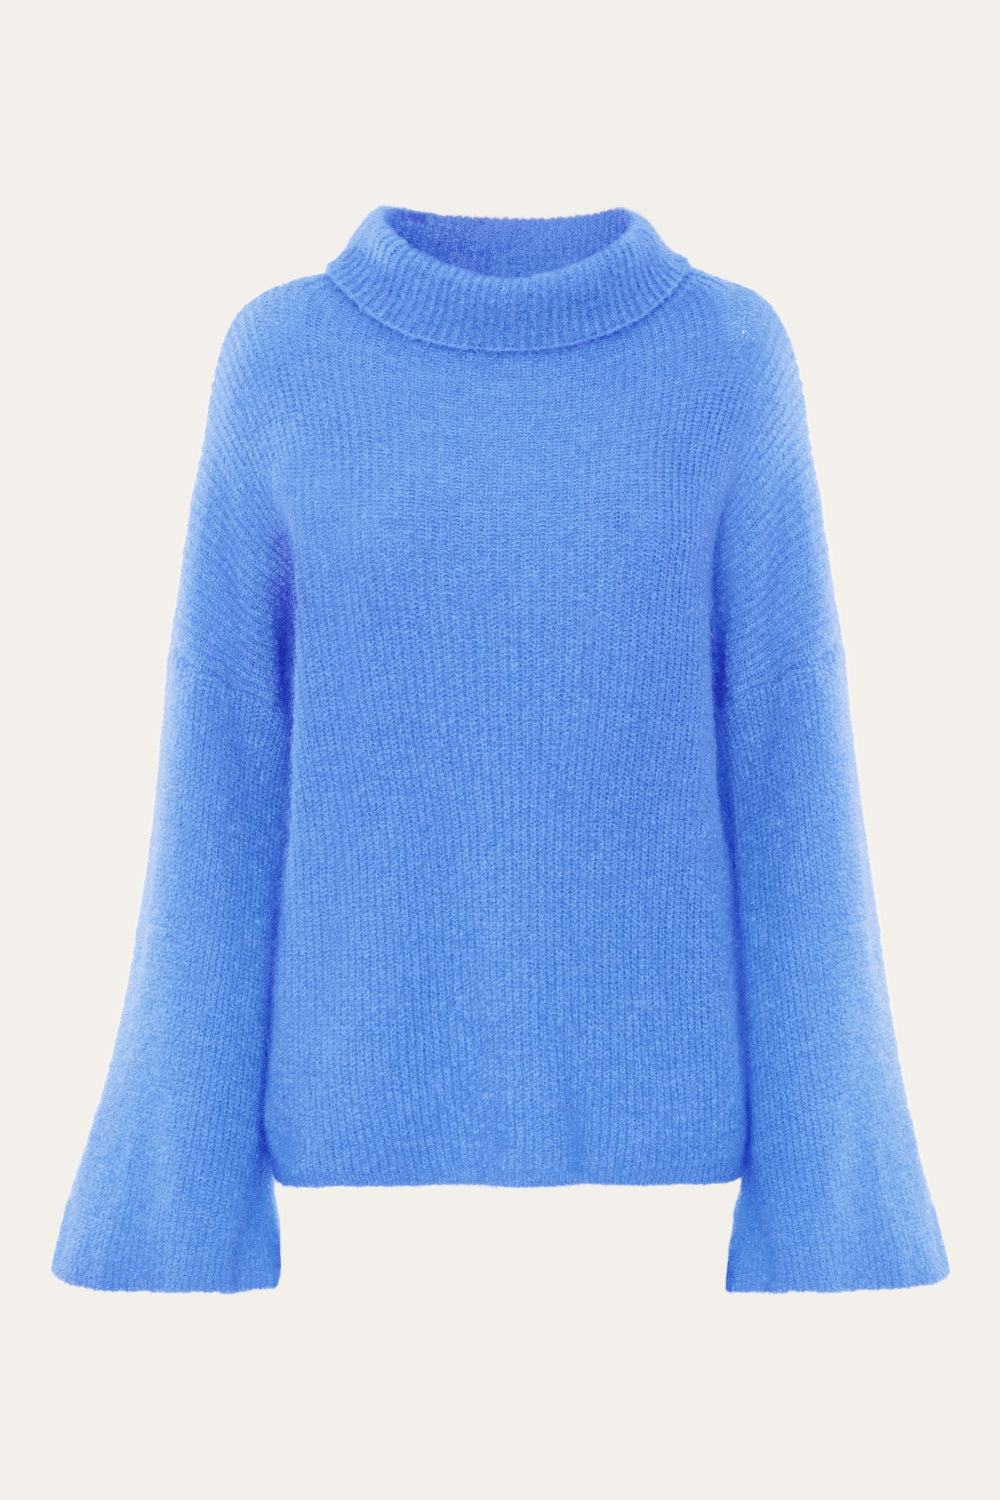 Felicia Oversized Knit Sky Blue | Americandreams